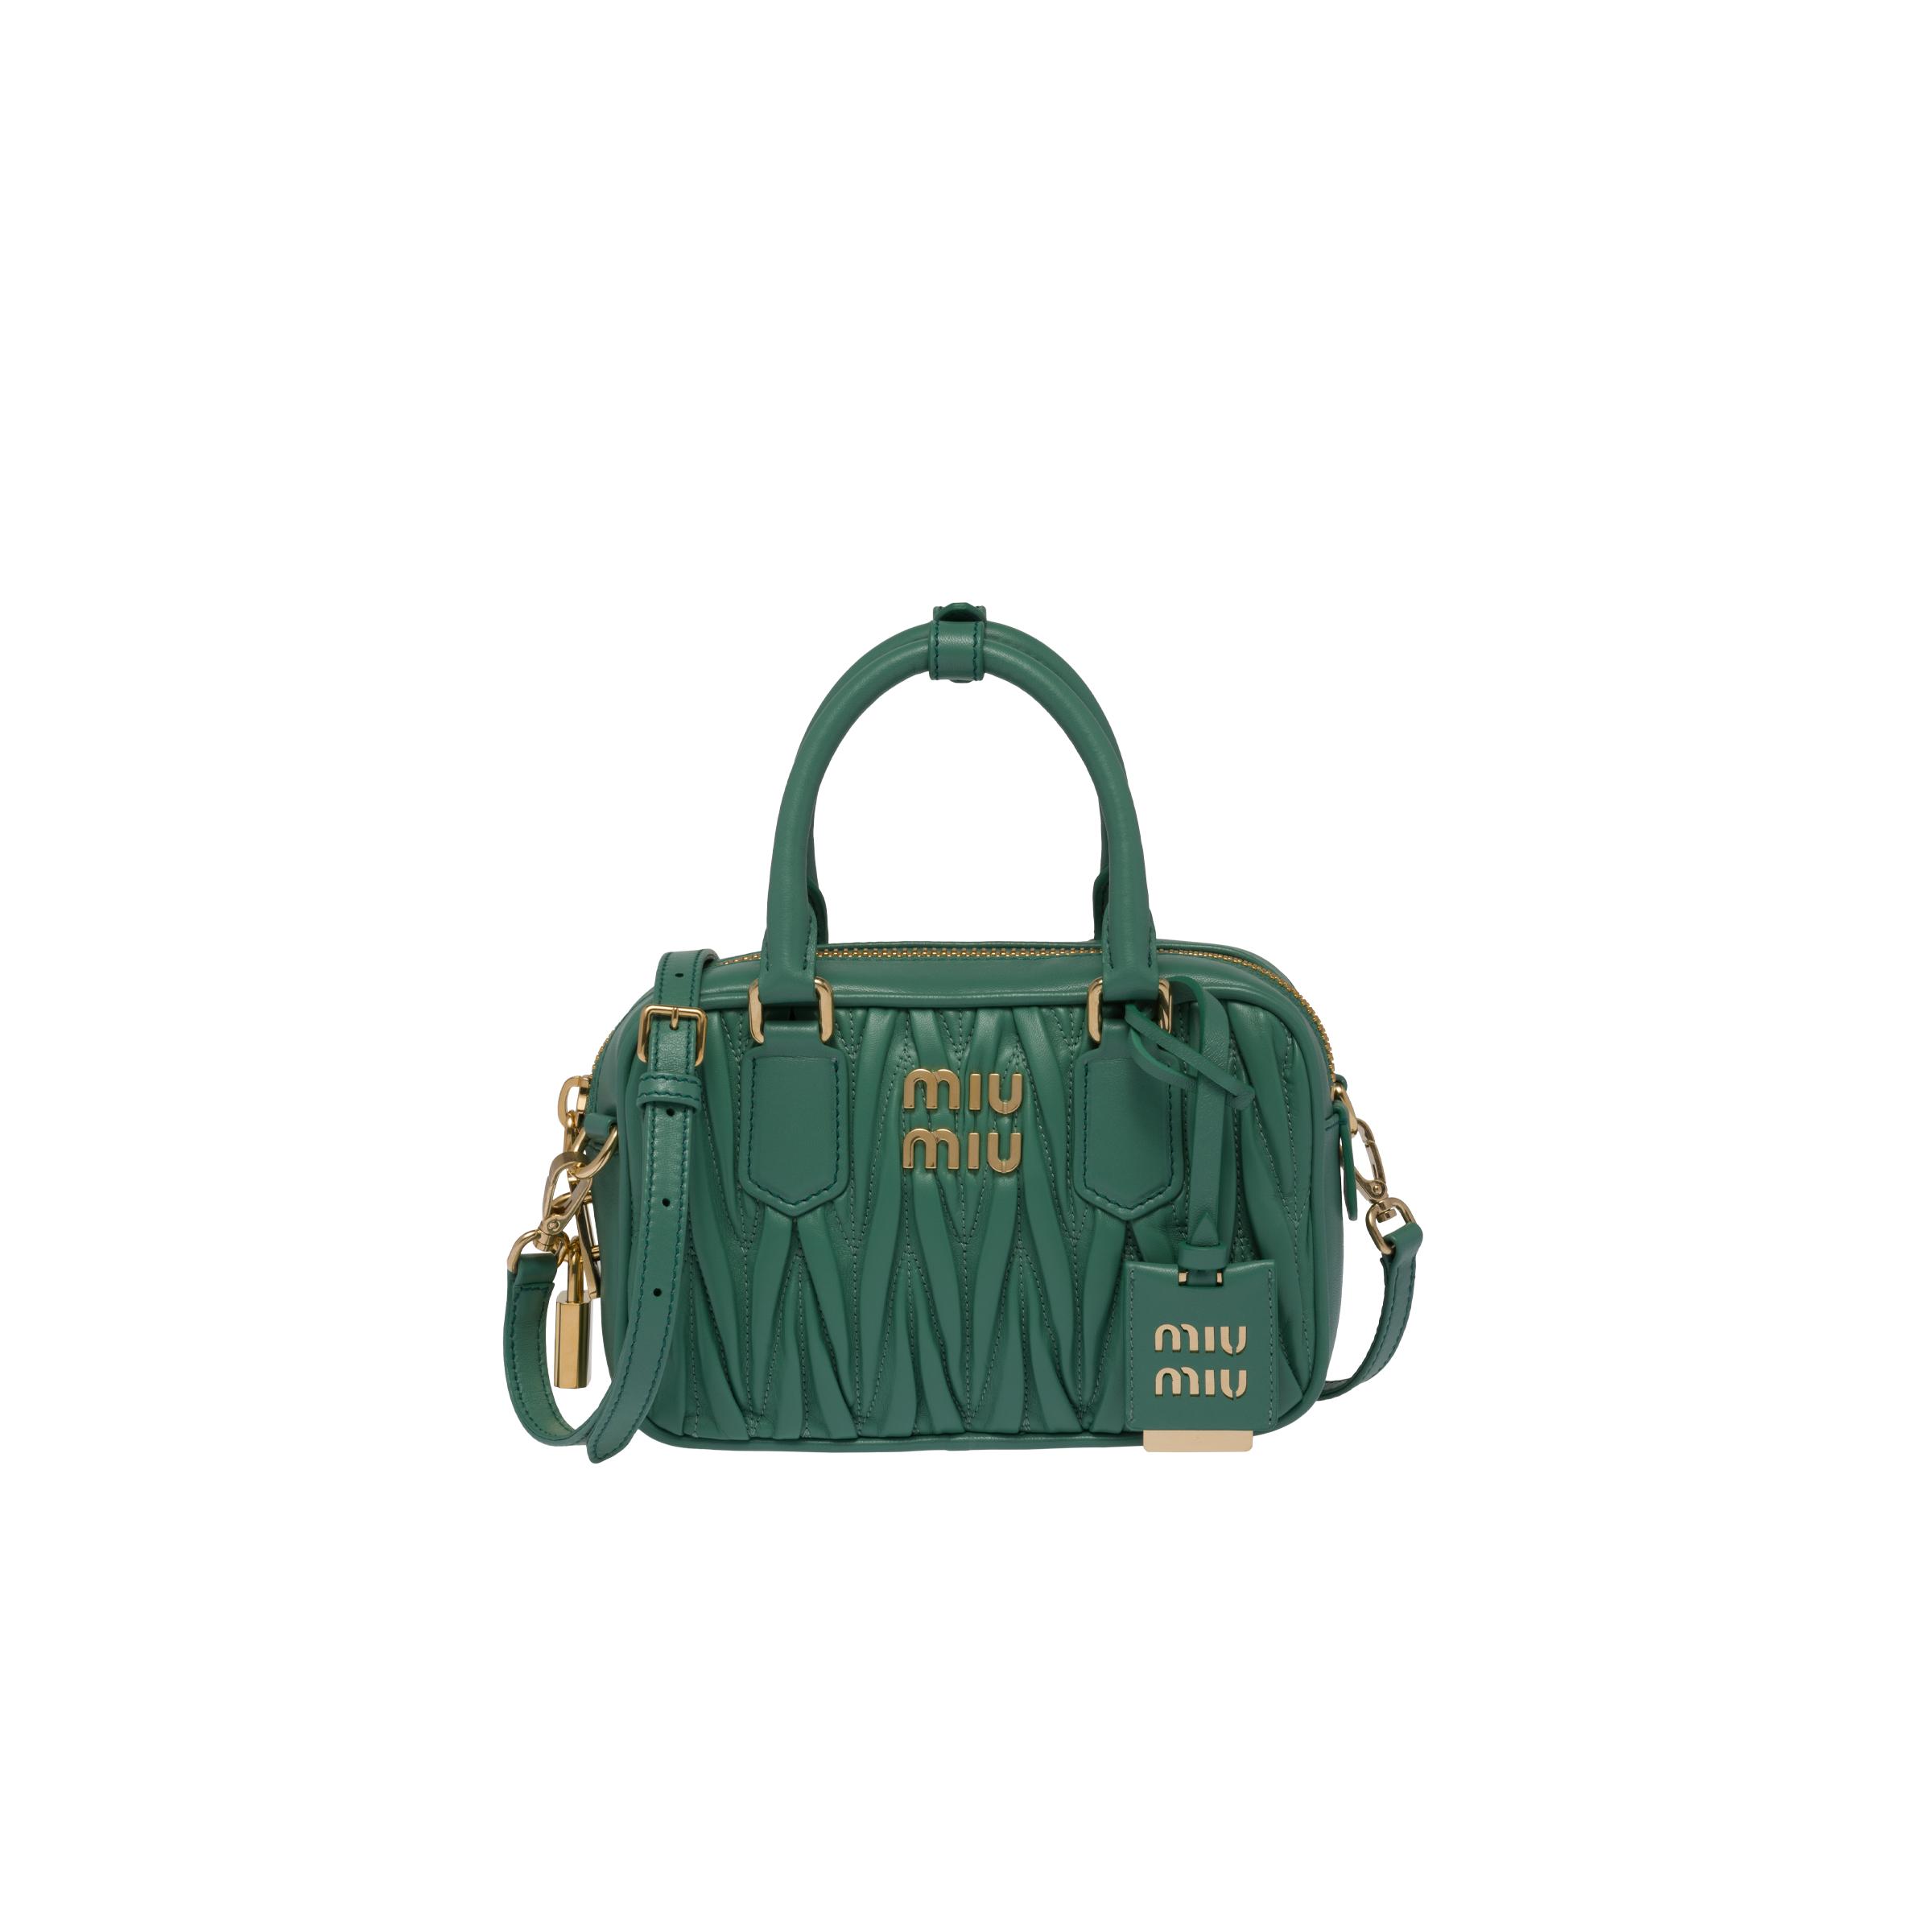 Miu Miu Matelassé Nappa Leather Top-handle Bag in Green | Lyst